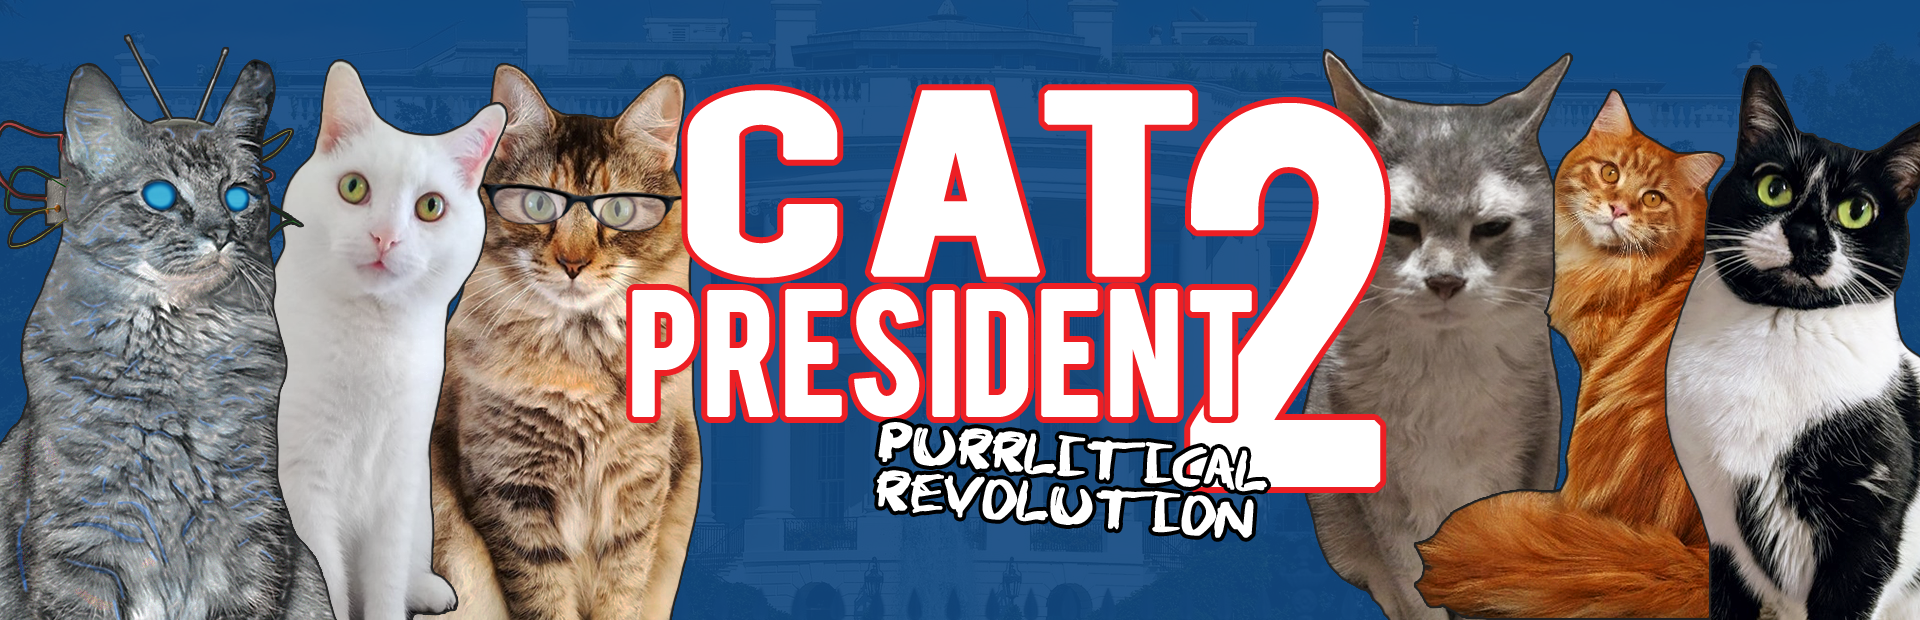 Cat President 2: Purrlitical Revolution